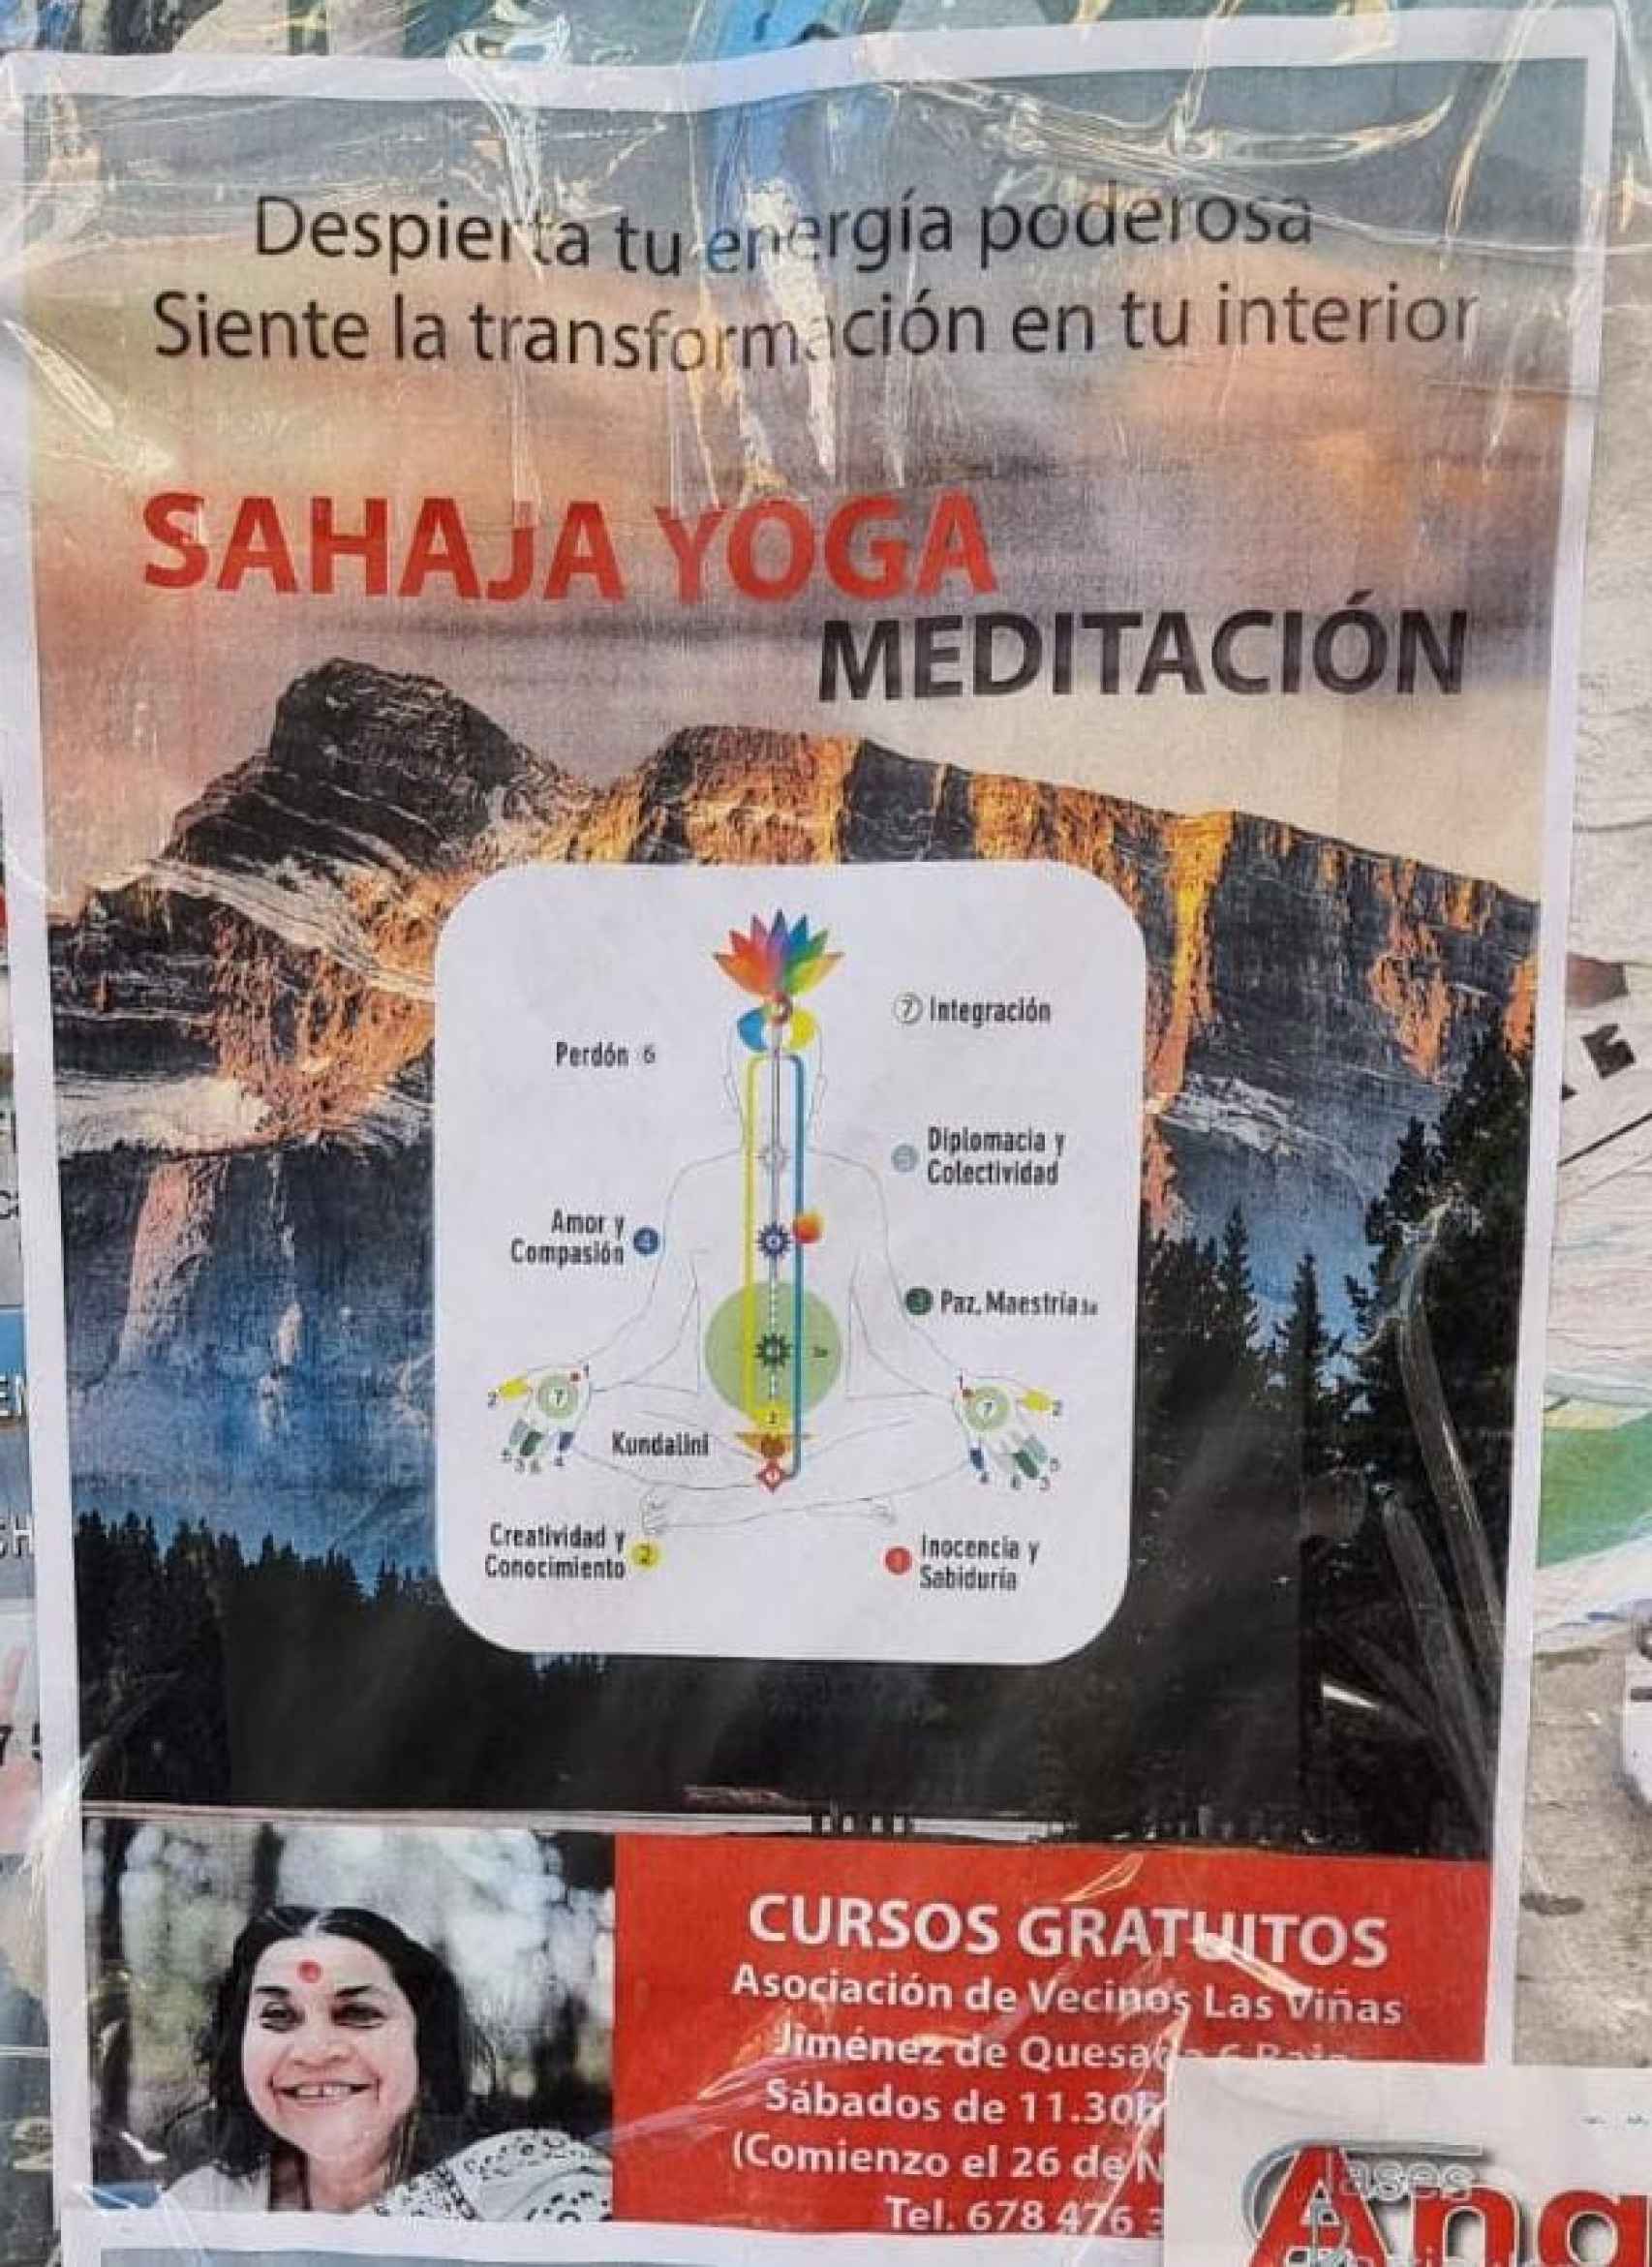 Cartel anunciador de la actividad de Sahaja Yoga en Zamora